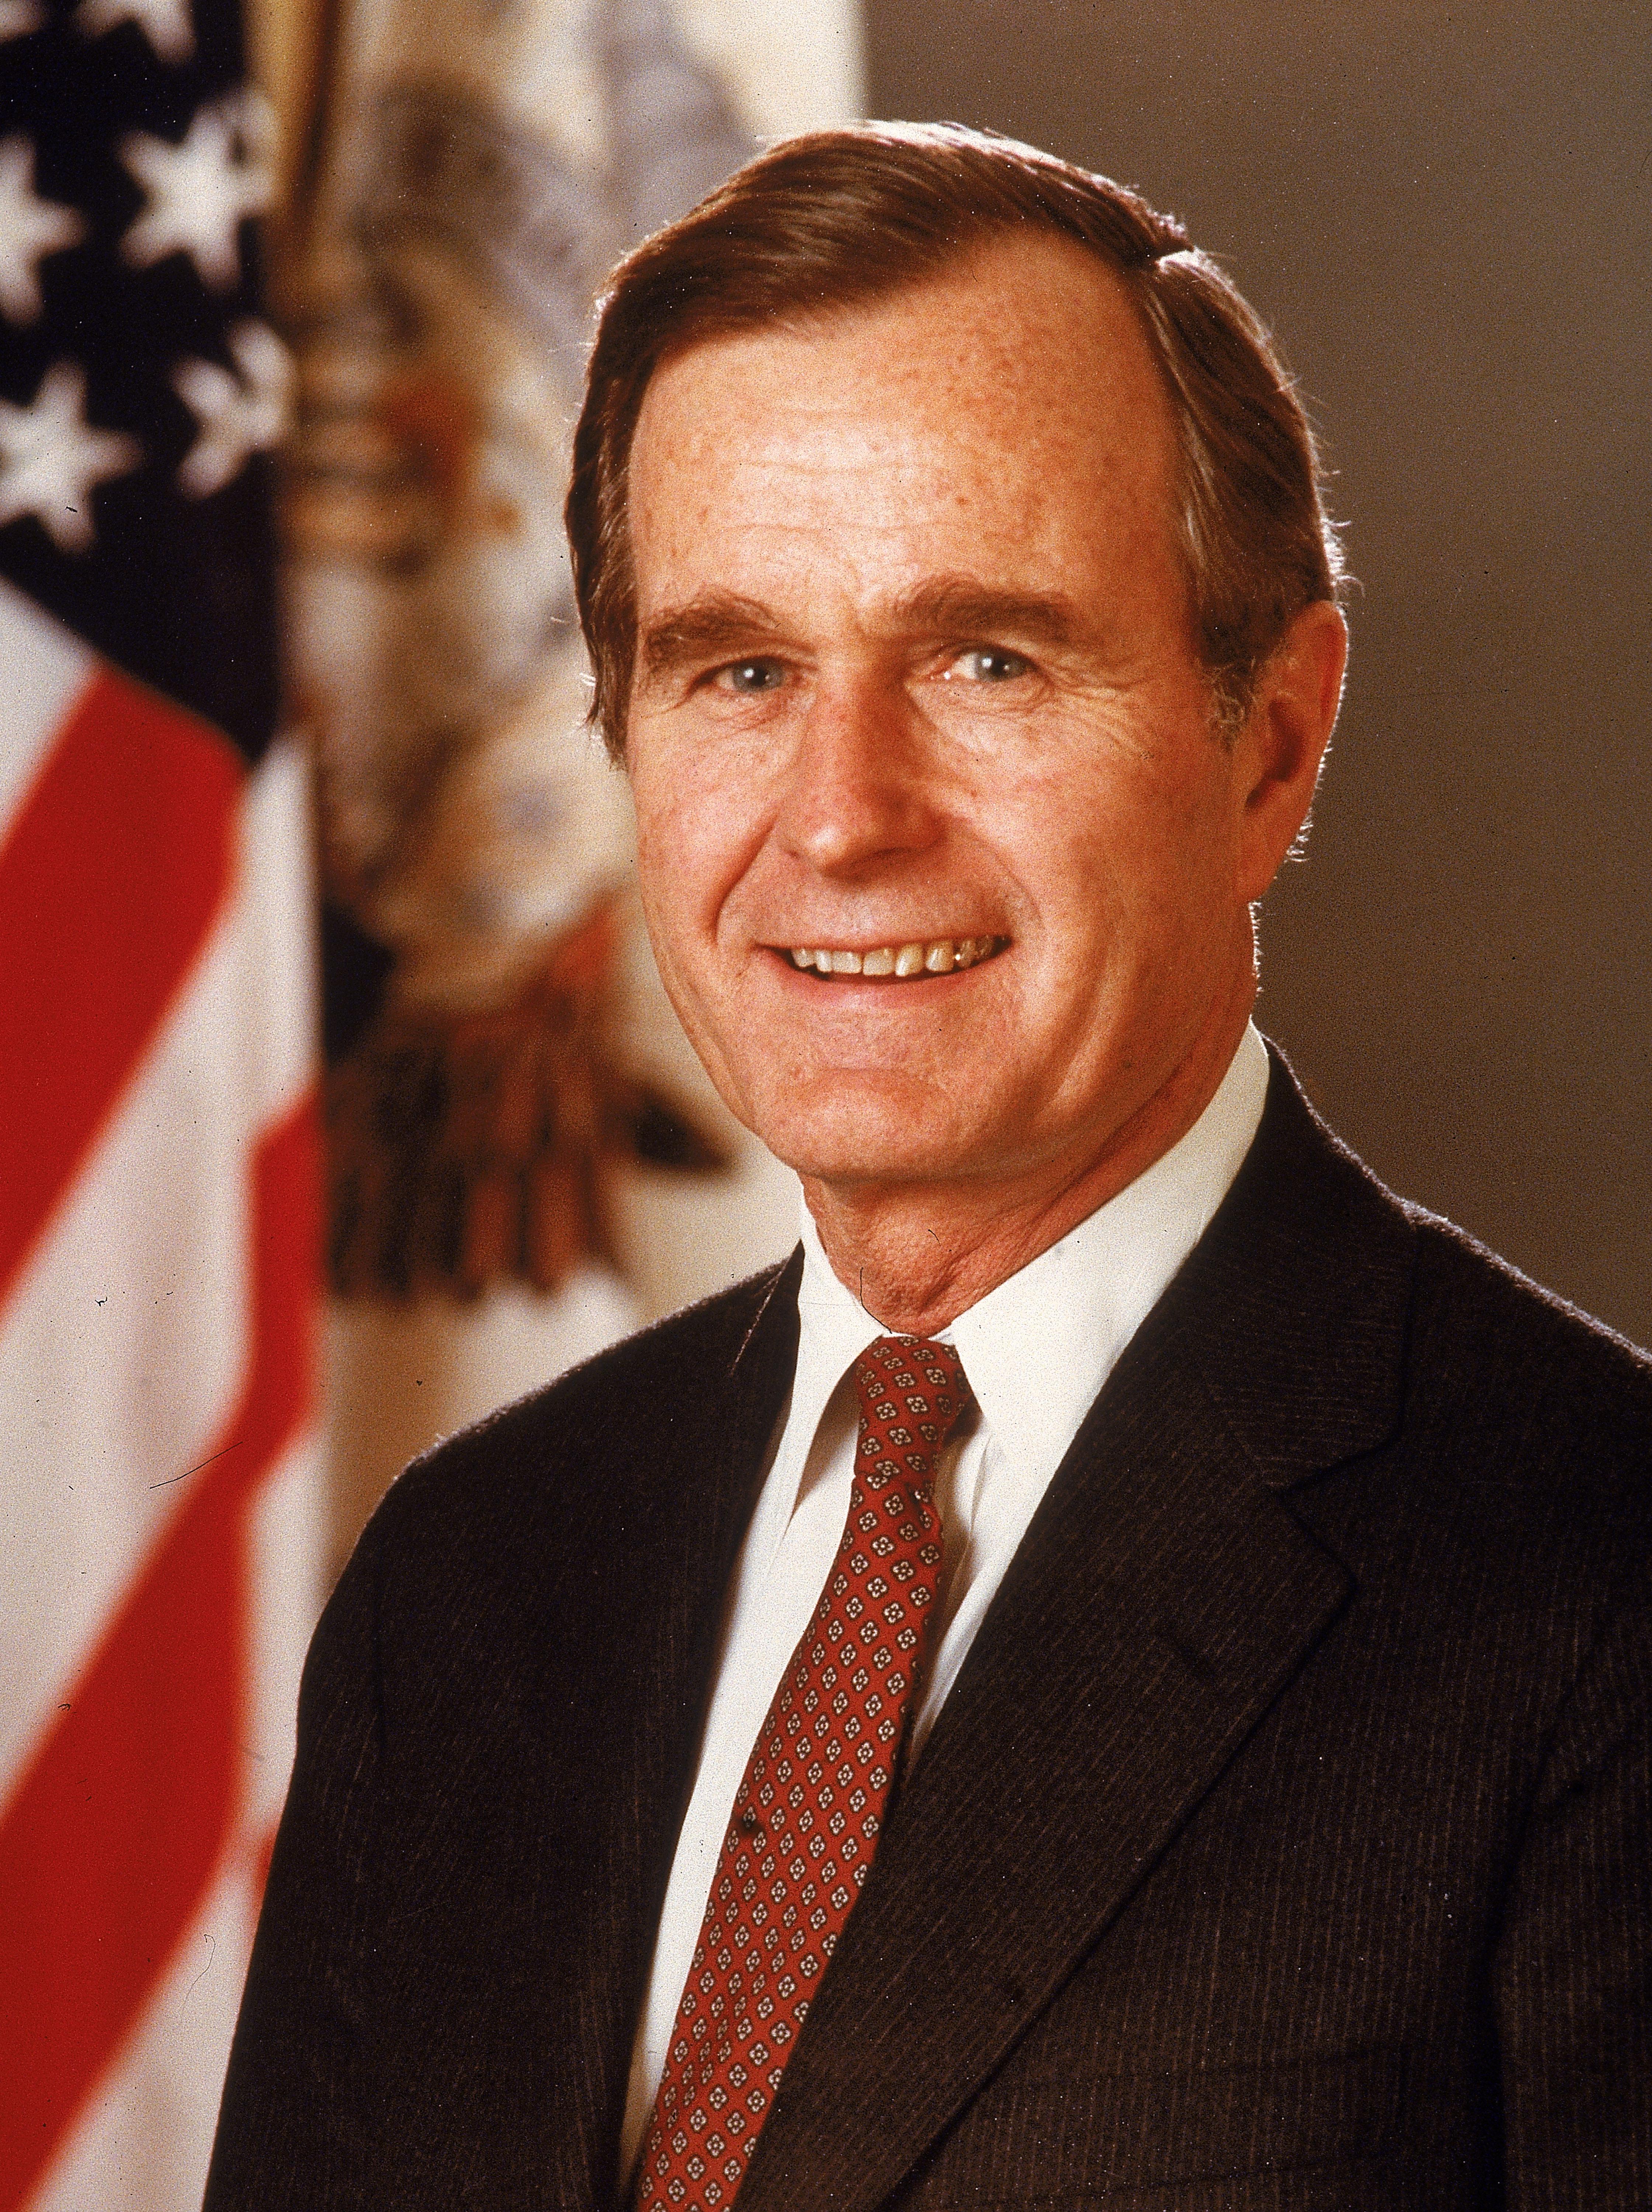 Porrtrait Of President George Bush, c. 1989.